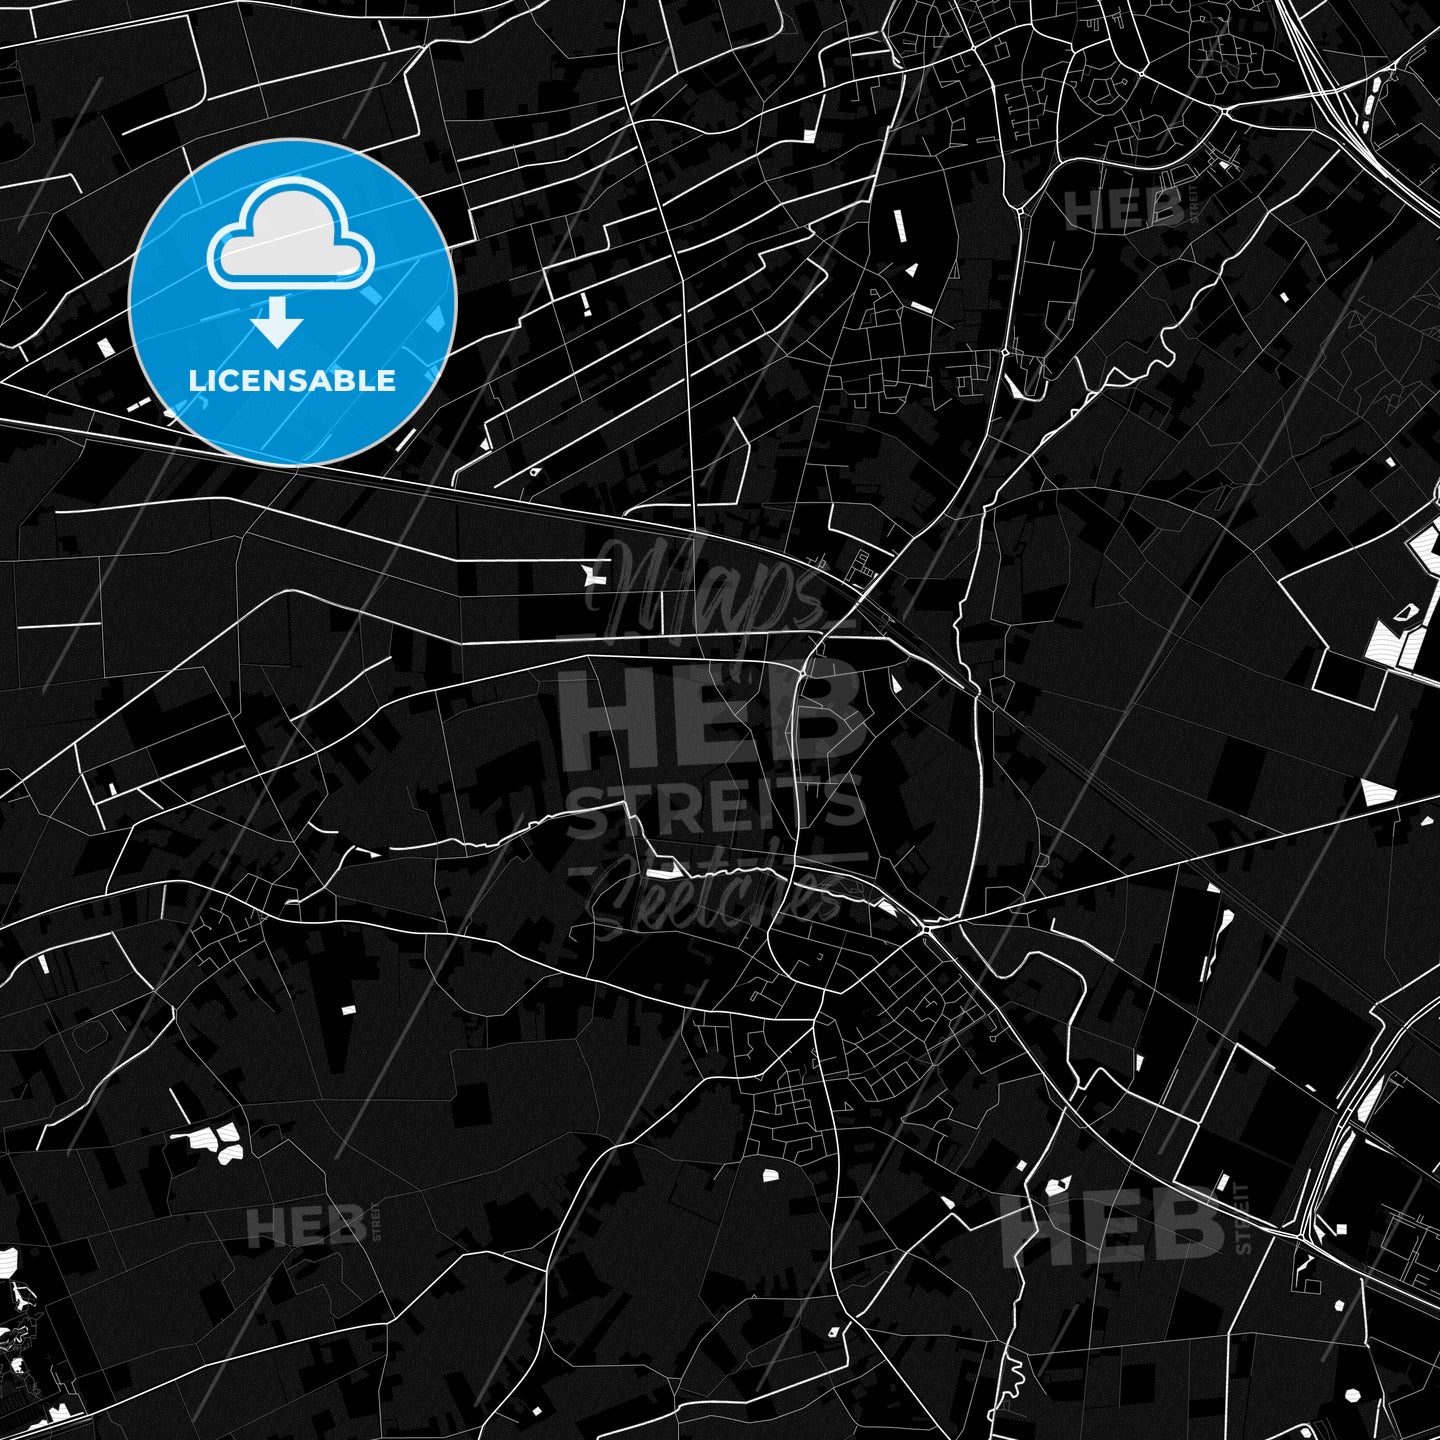 Horst aan de Maas, Netherlands PDF map